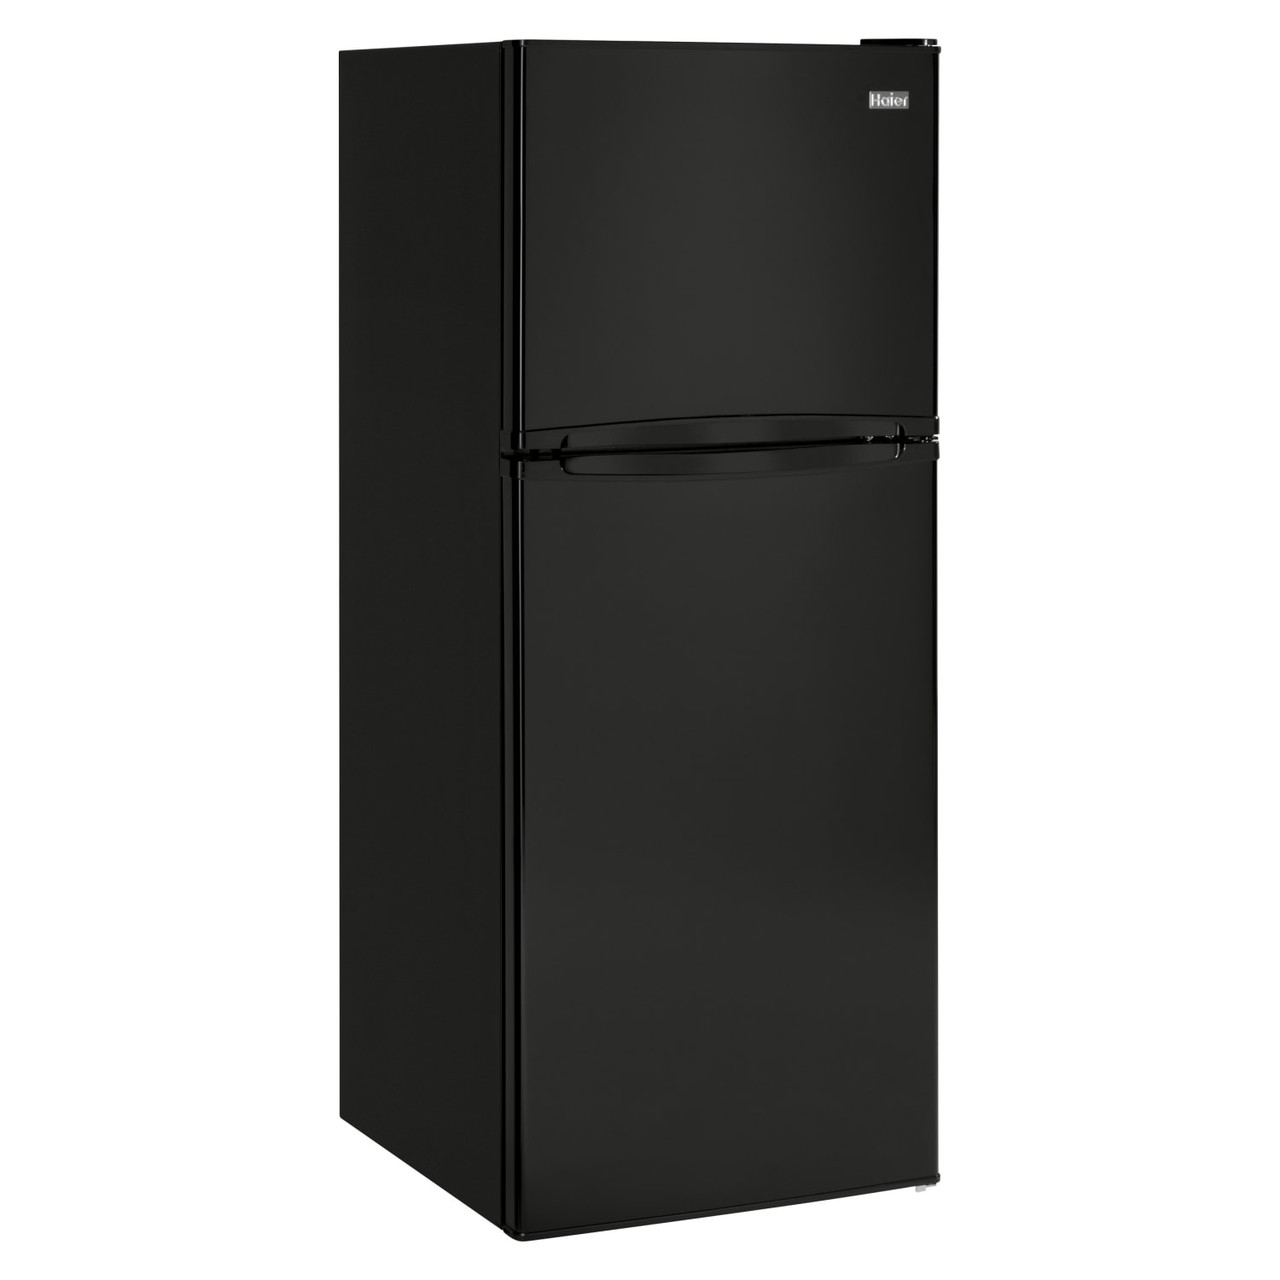 Haier 9.8 Cubic Foot Top-Mount Refrigerator - Black - HA10TG21SB